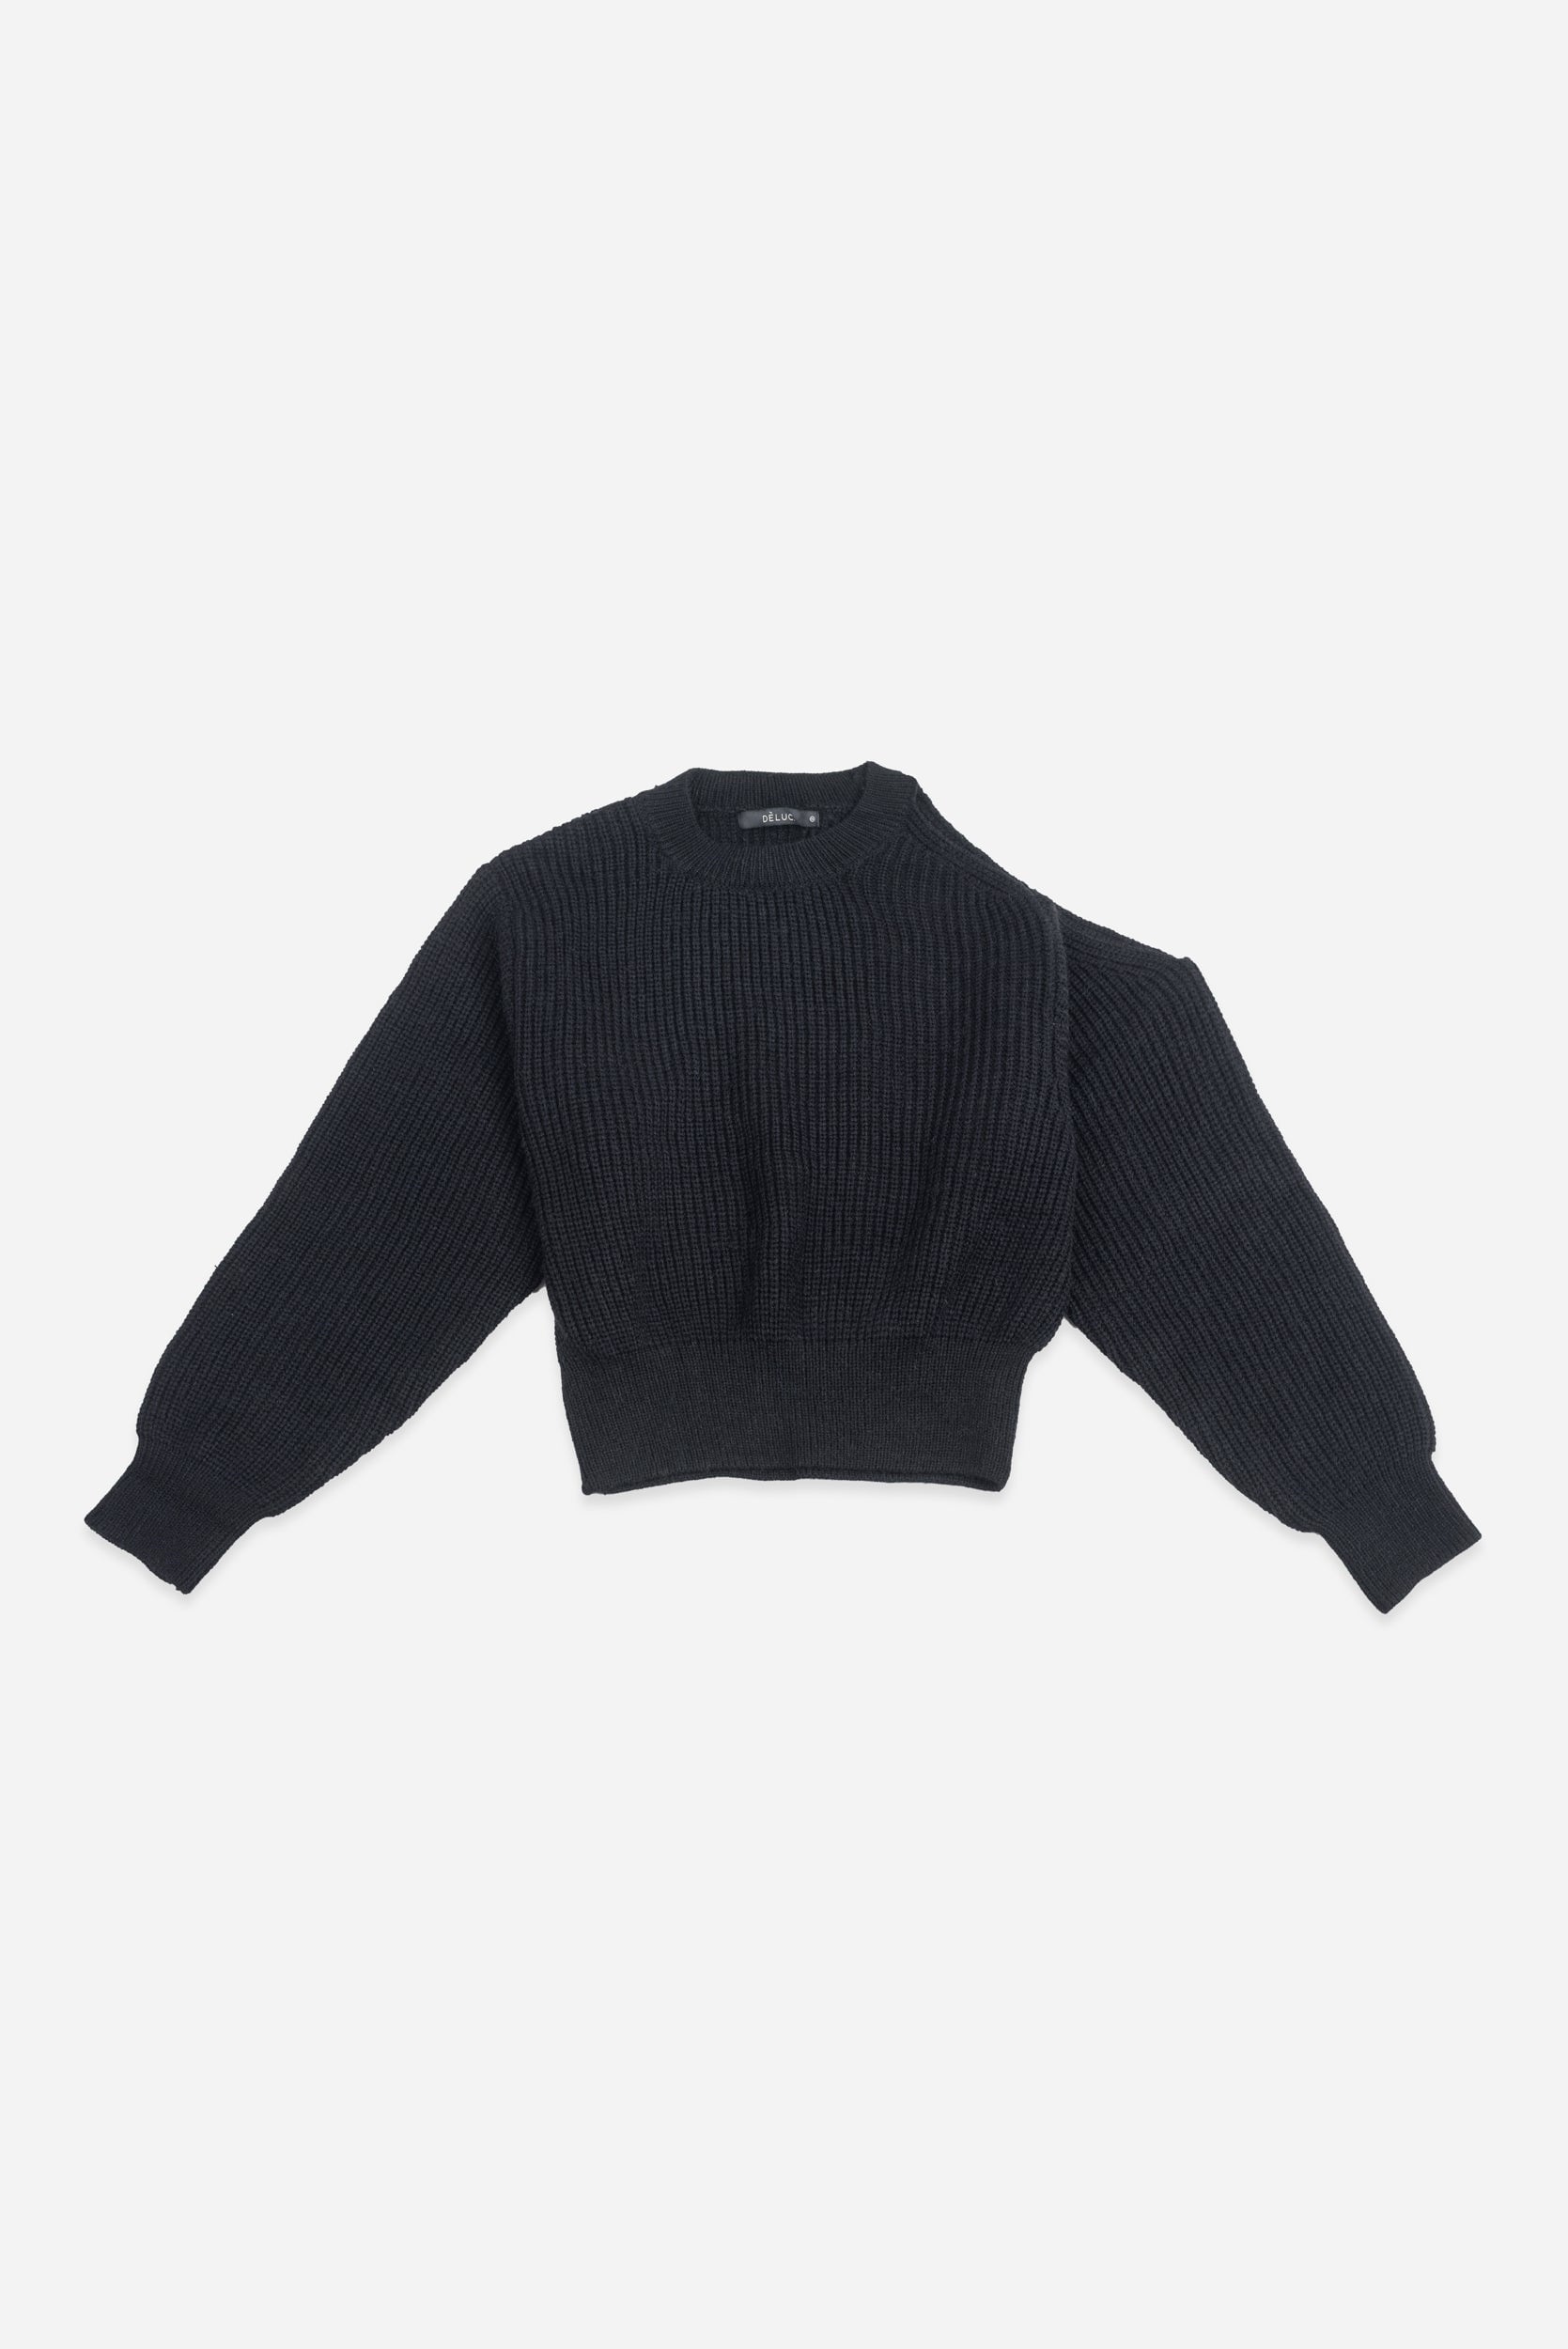 Conti Sweater Black - Dèluc.